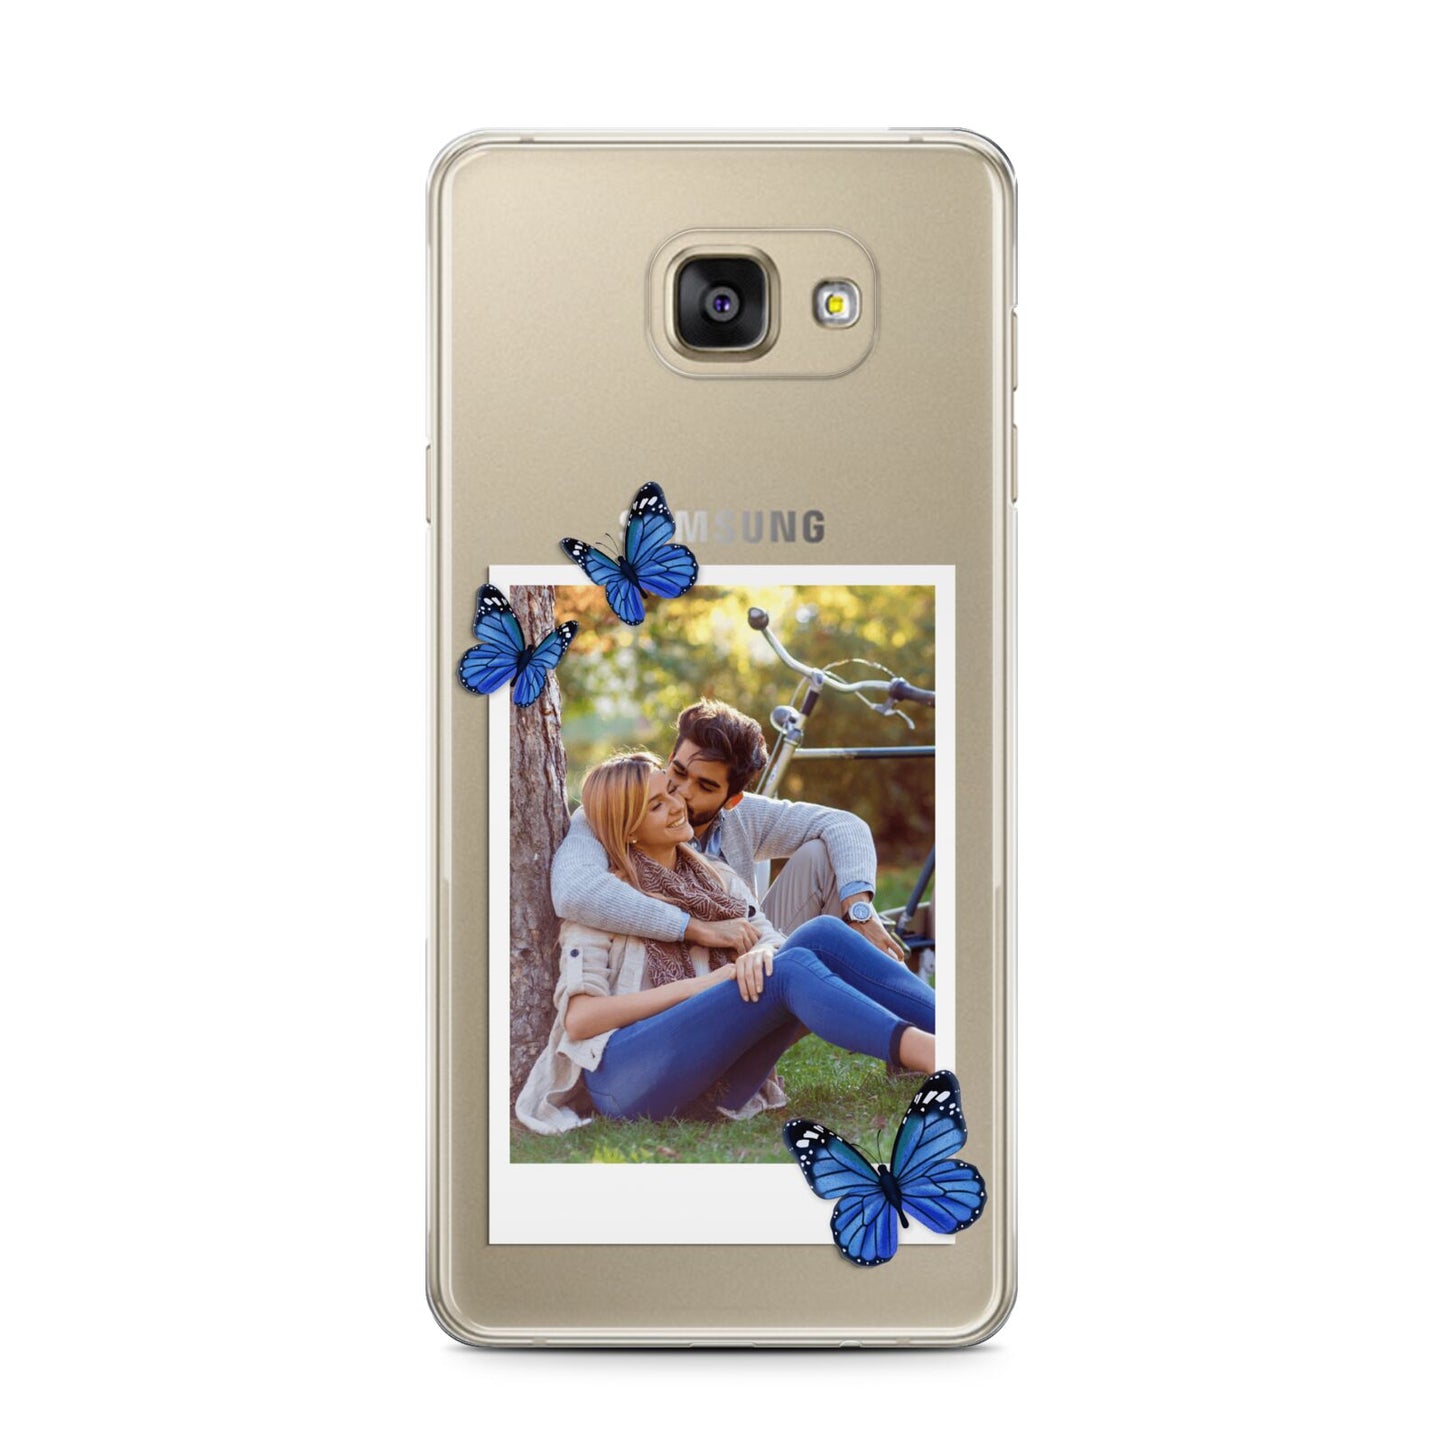 Polaroid Photo Samsung Galaxy A7 2016 Case on gold phone